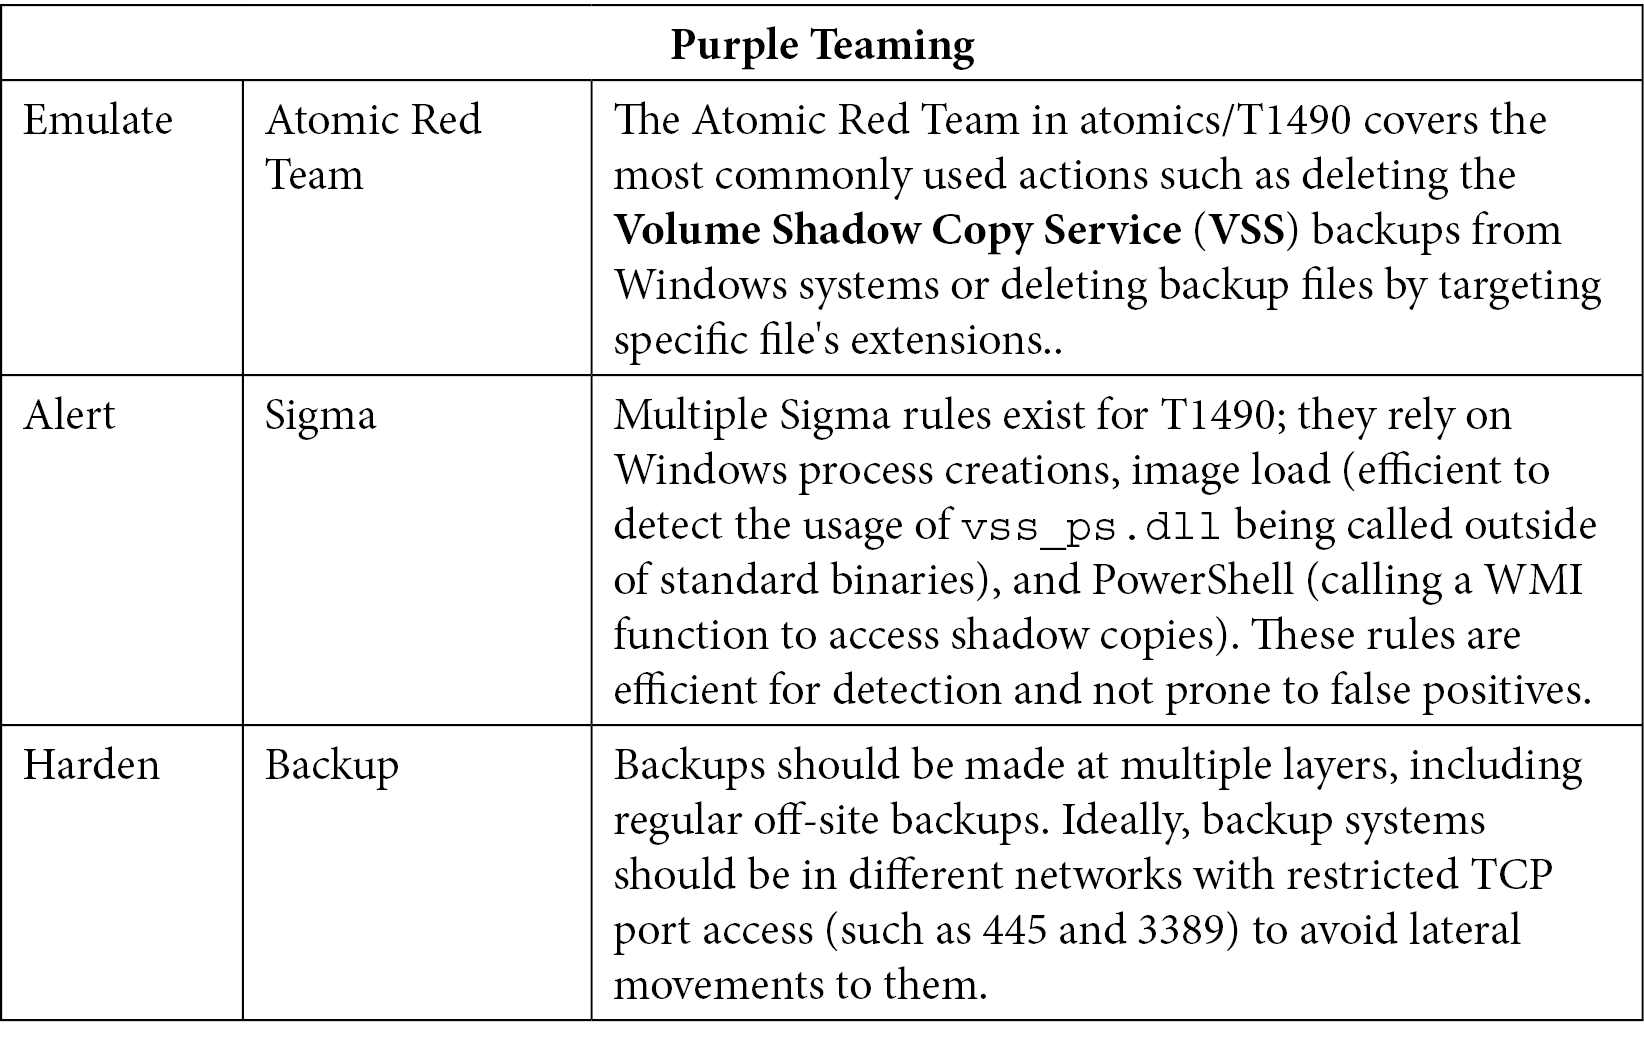 Table 10.20 – Purple Teaming T1490
